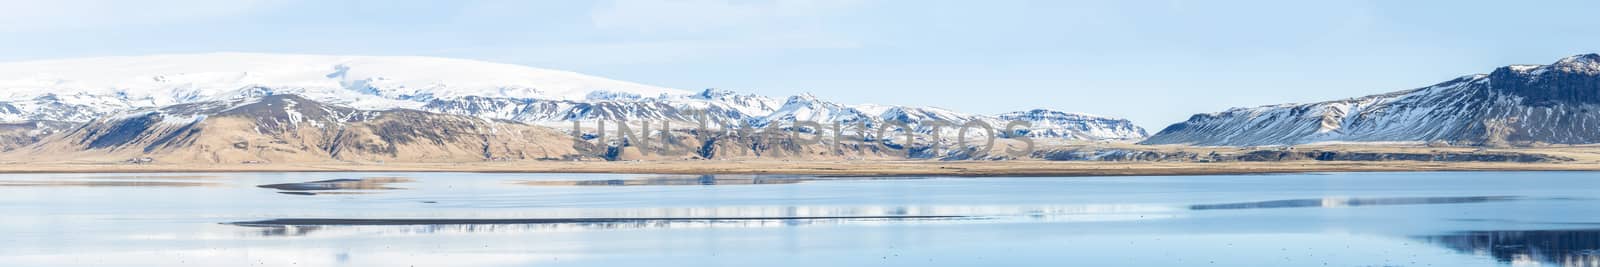 Iceland glacier by vichie81